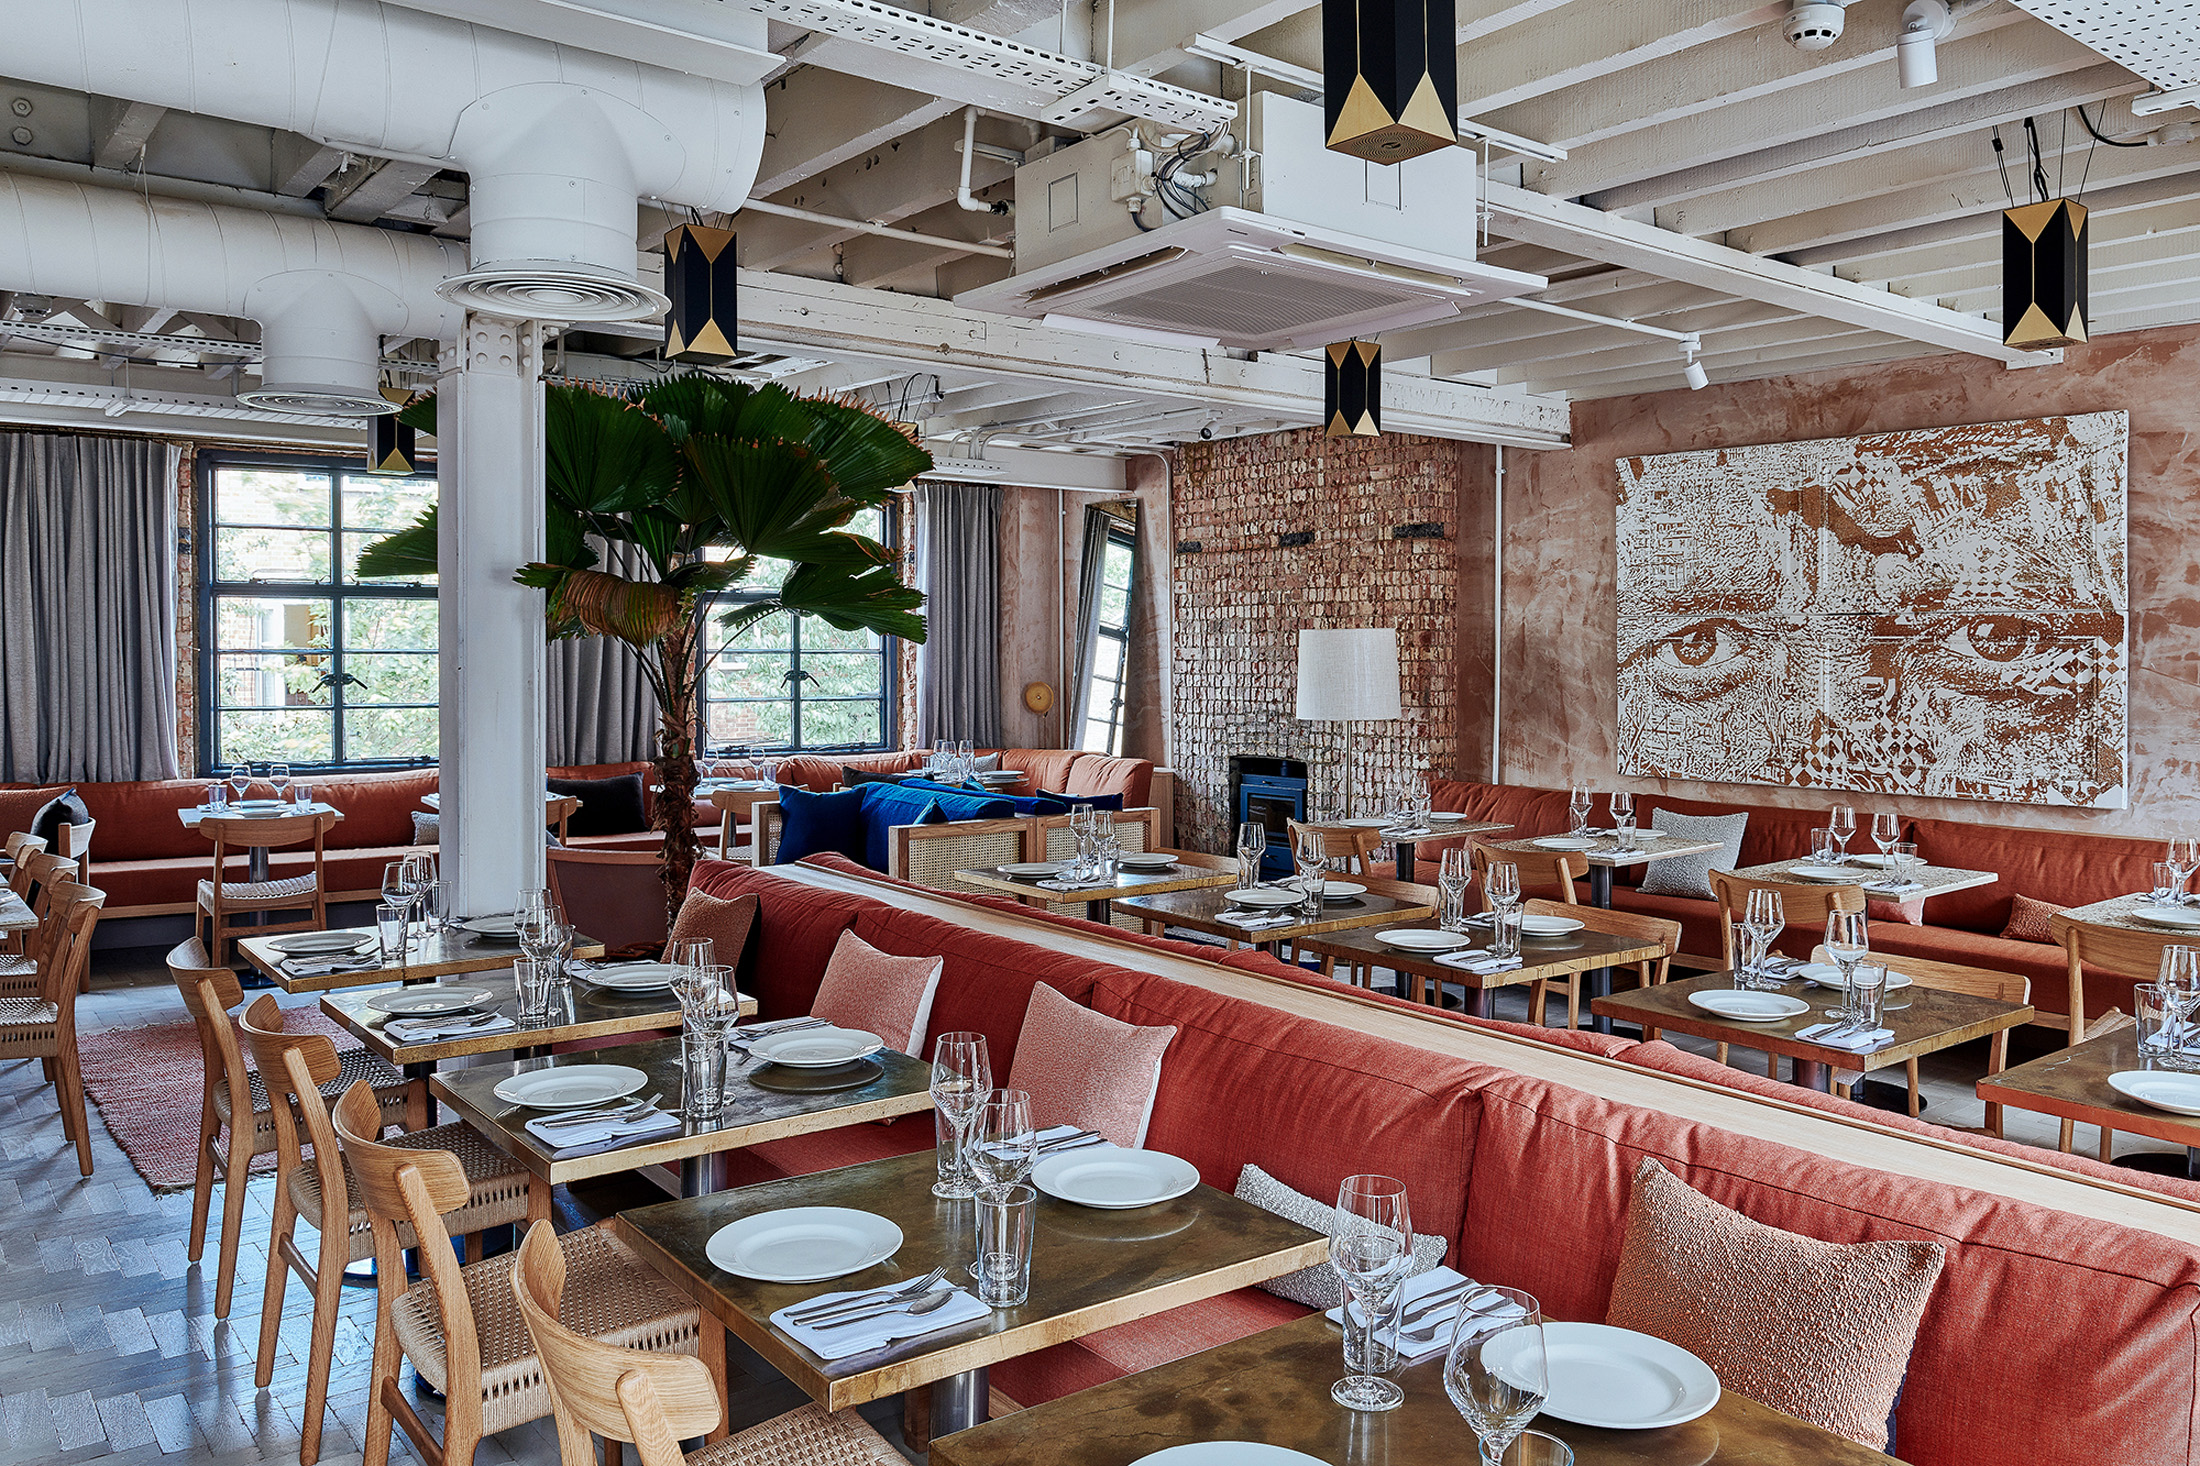 Gold Restaurant in Notting Hill by architecture firm Bechtolsheim Studio